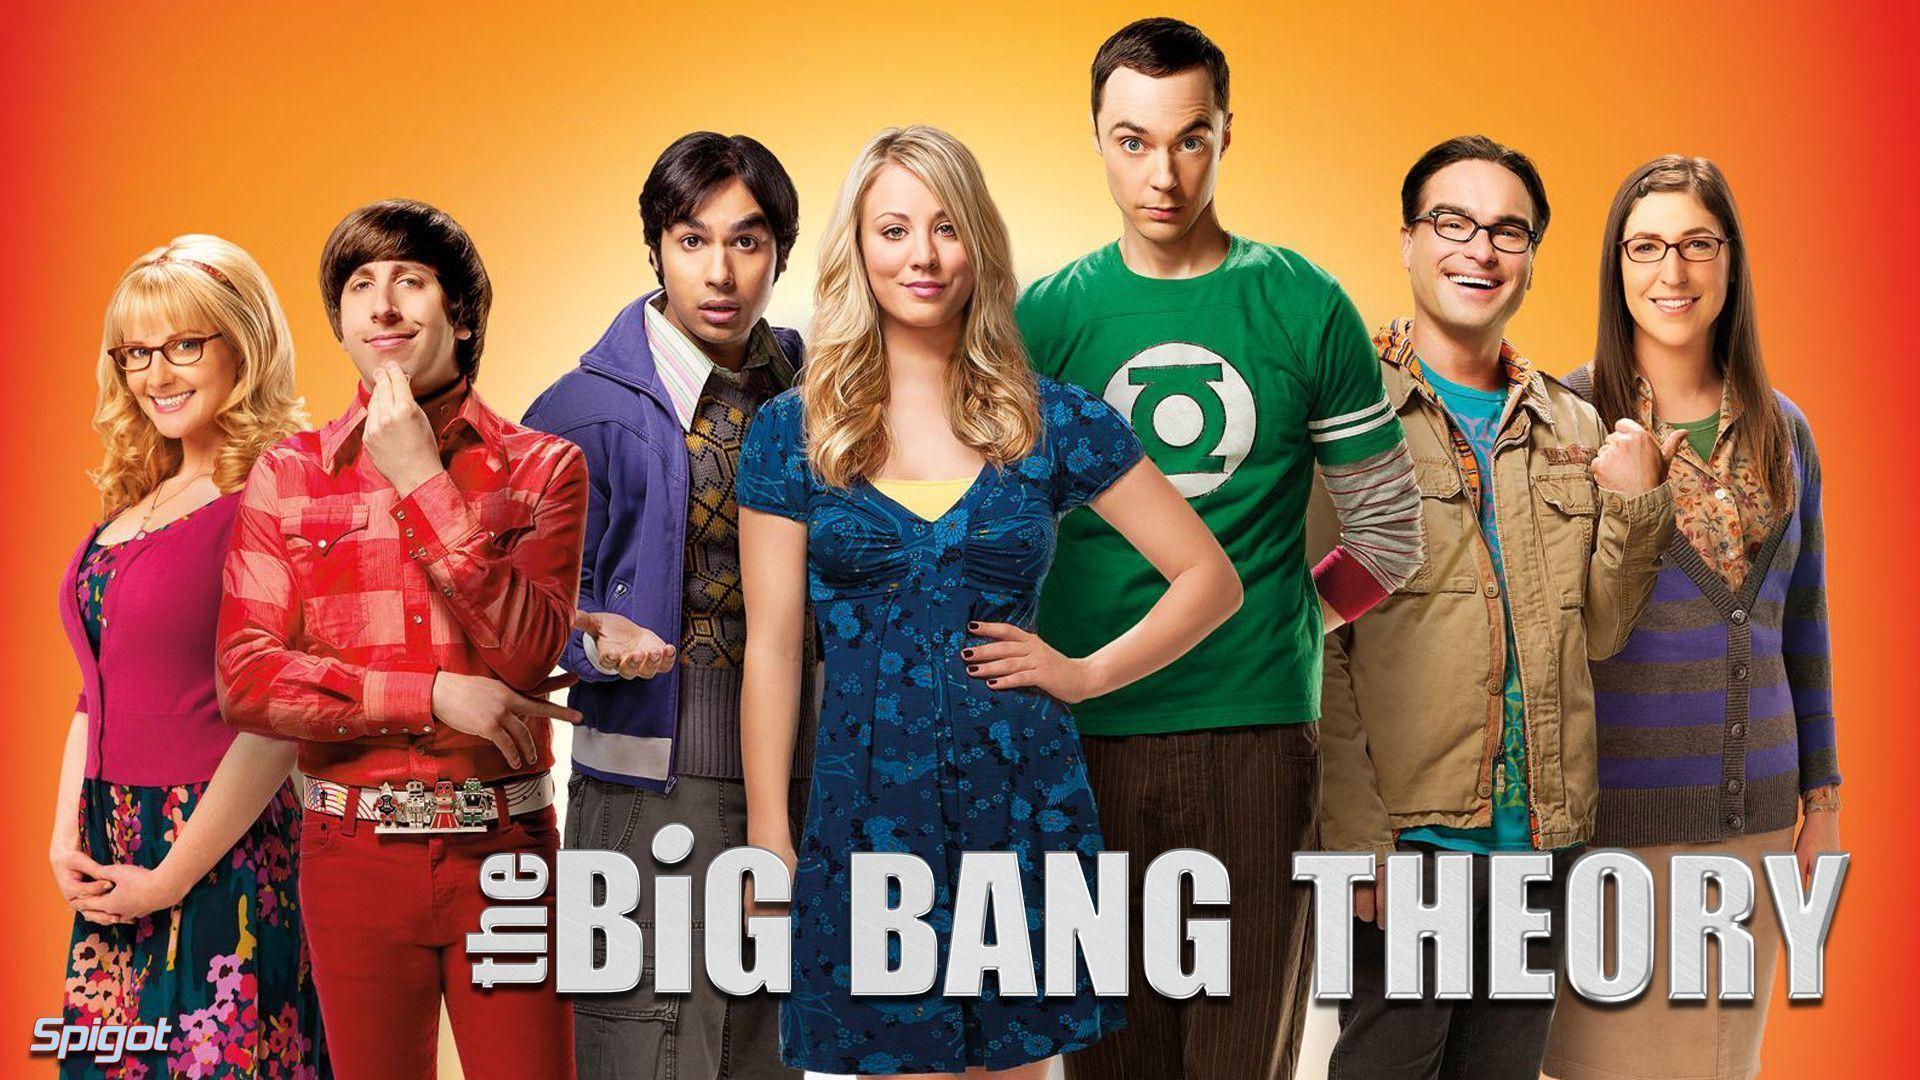 The Big Bang Theory Theme Song. Movie Theme Songs & TV Soundtracks